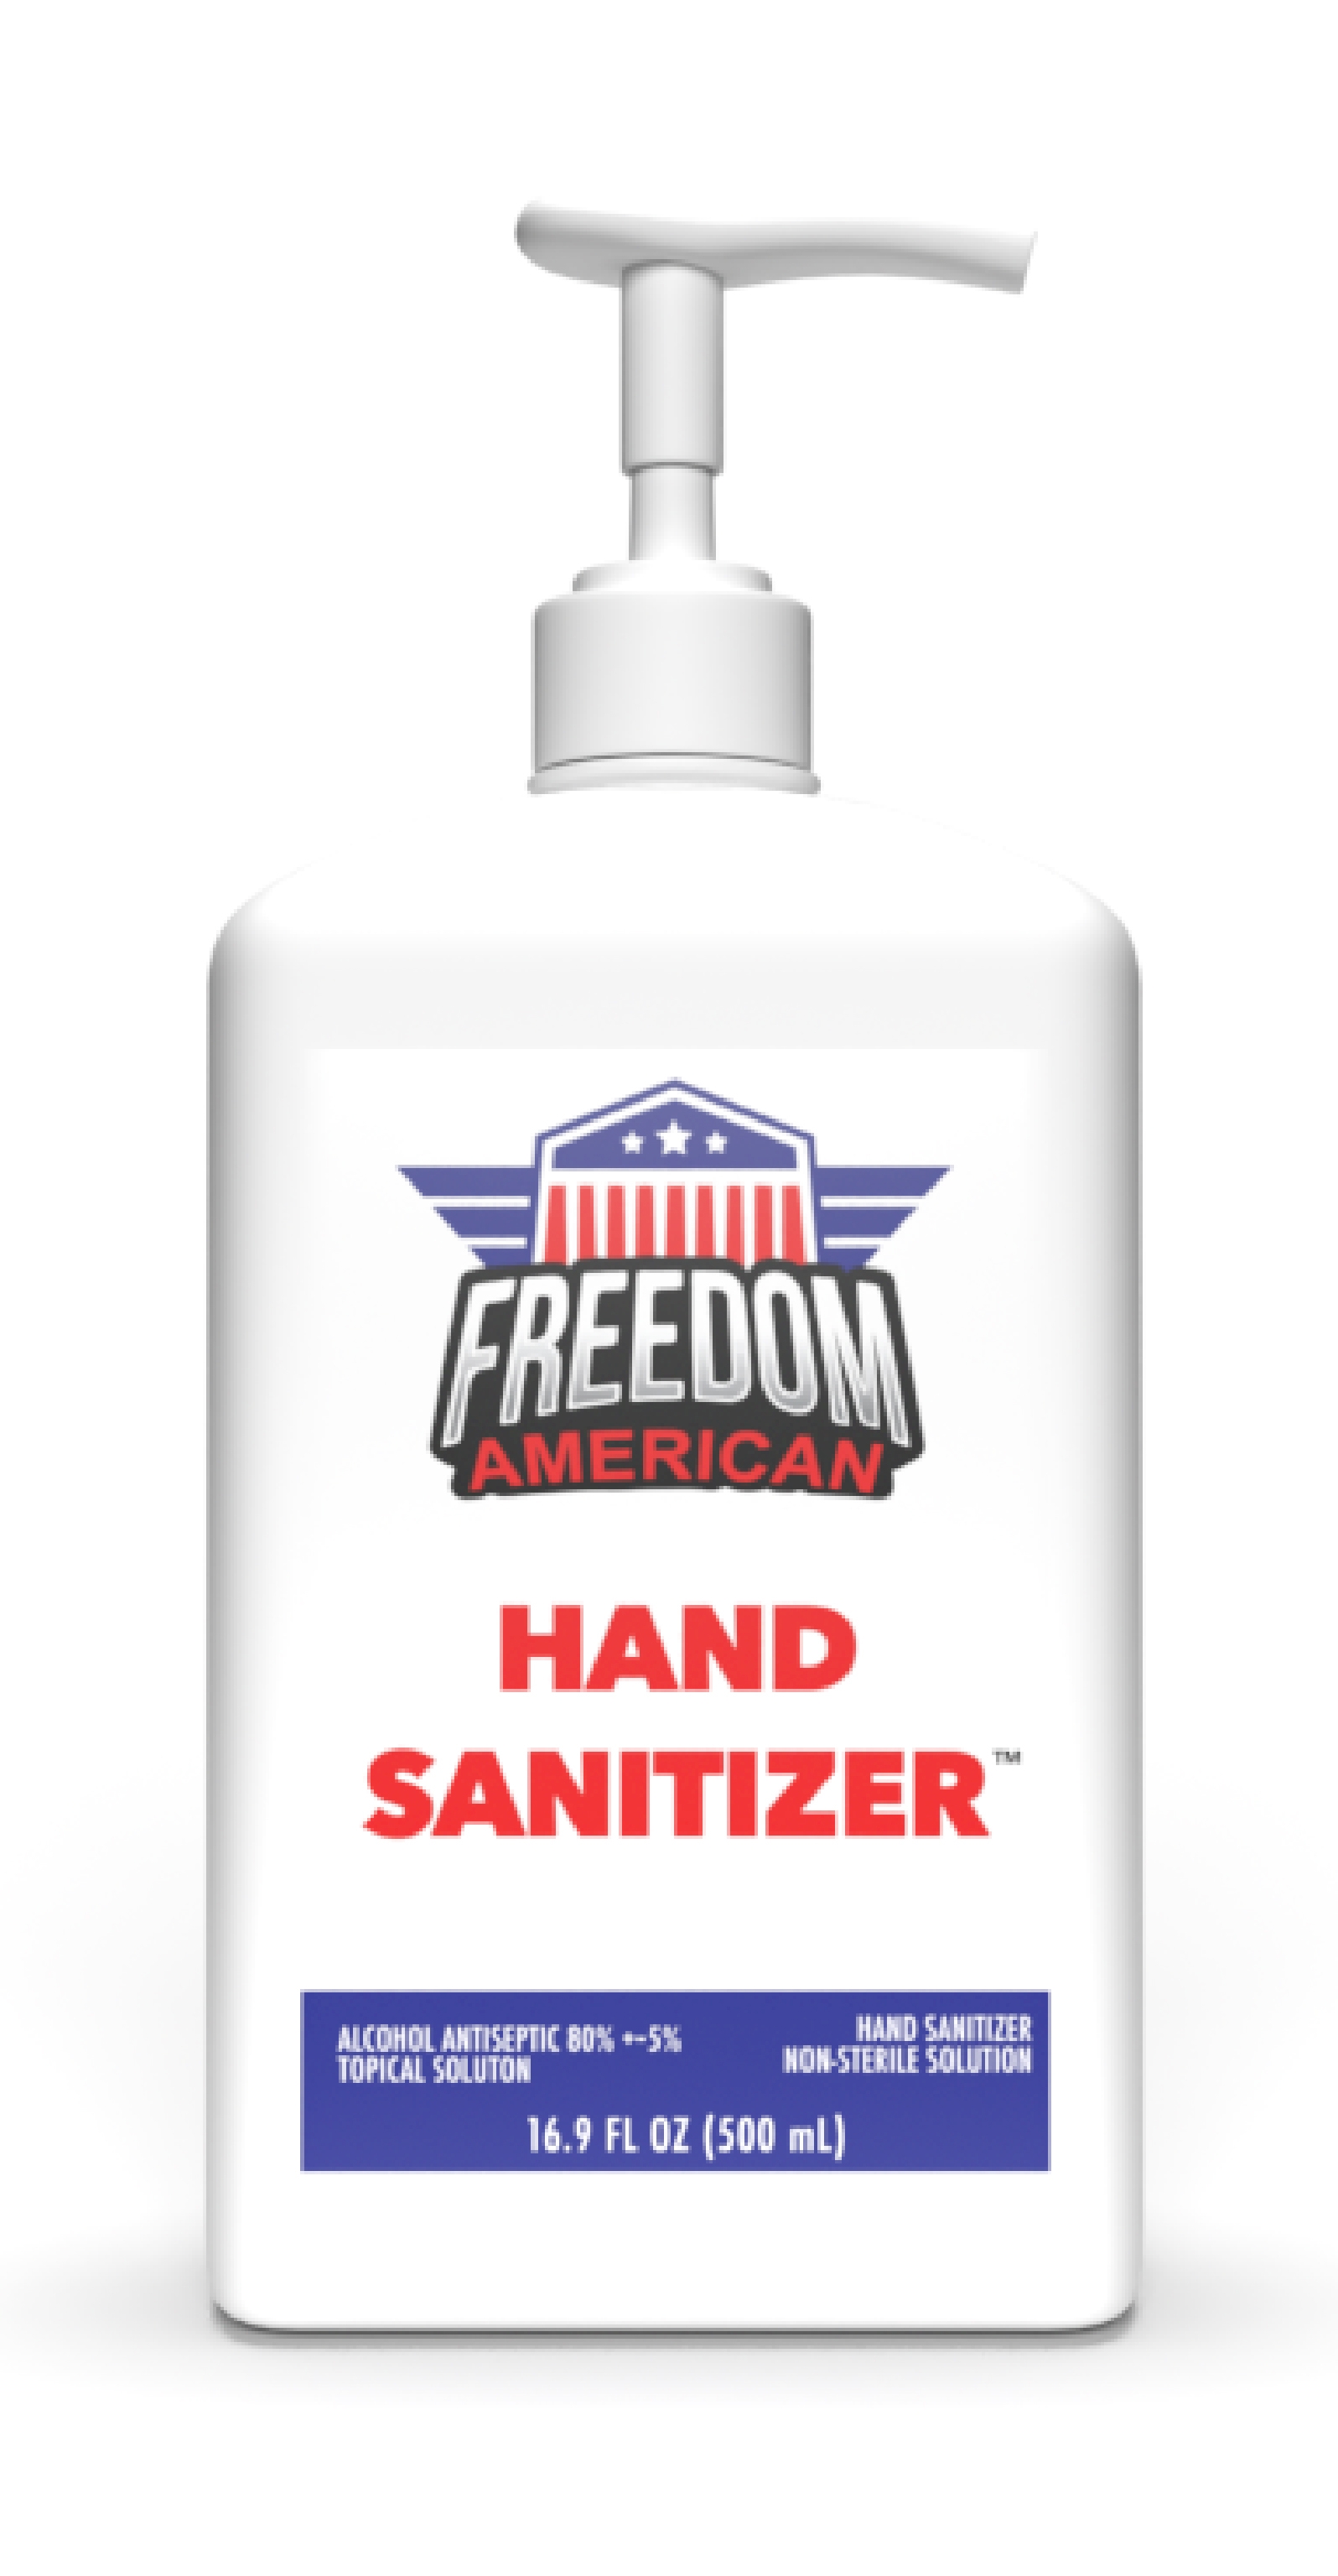 Freedom American 16.9 oz (500 mL) Hand Sanitizer Bottle Front Label